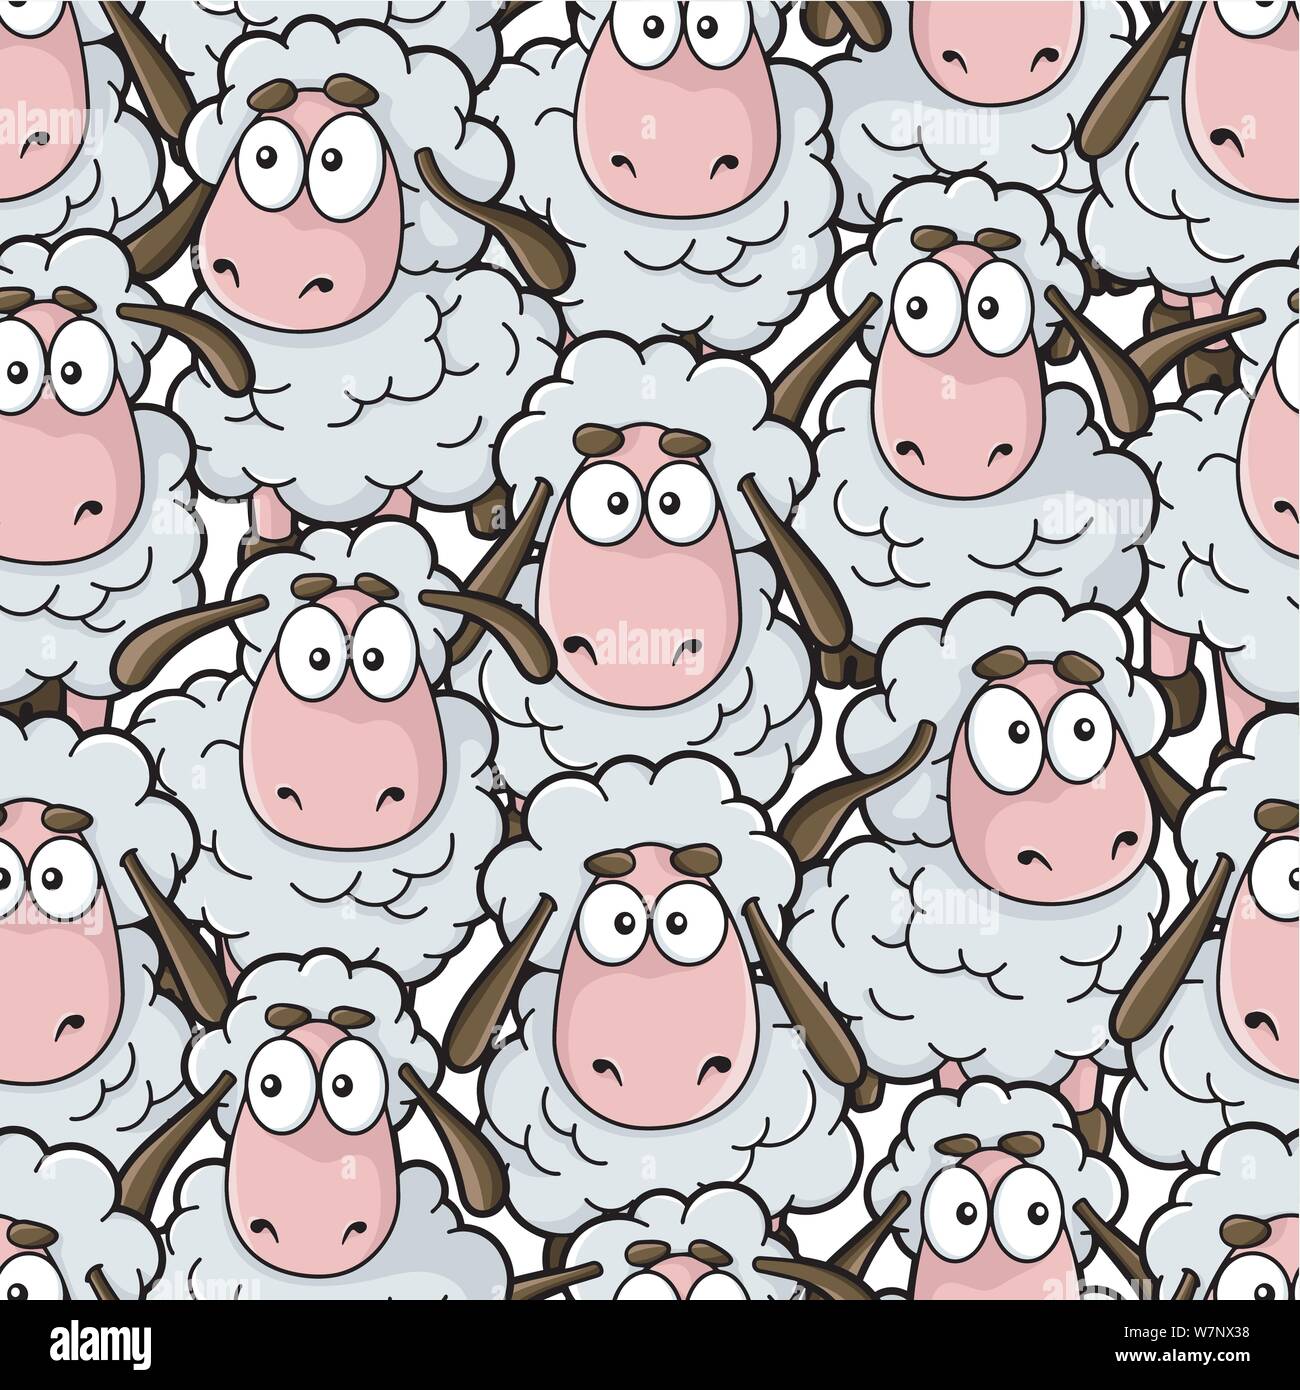 Sheep cartoon seamless pattern. Stock Vector